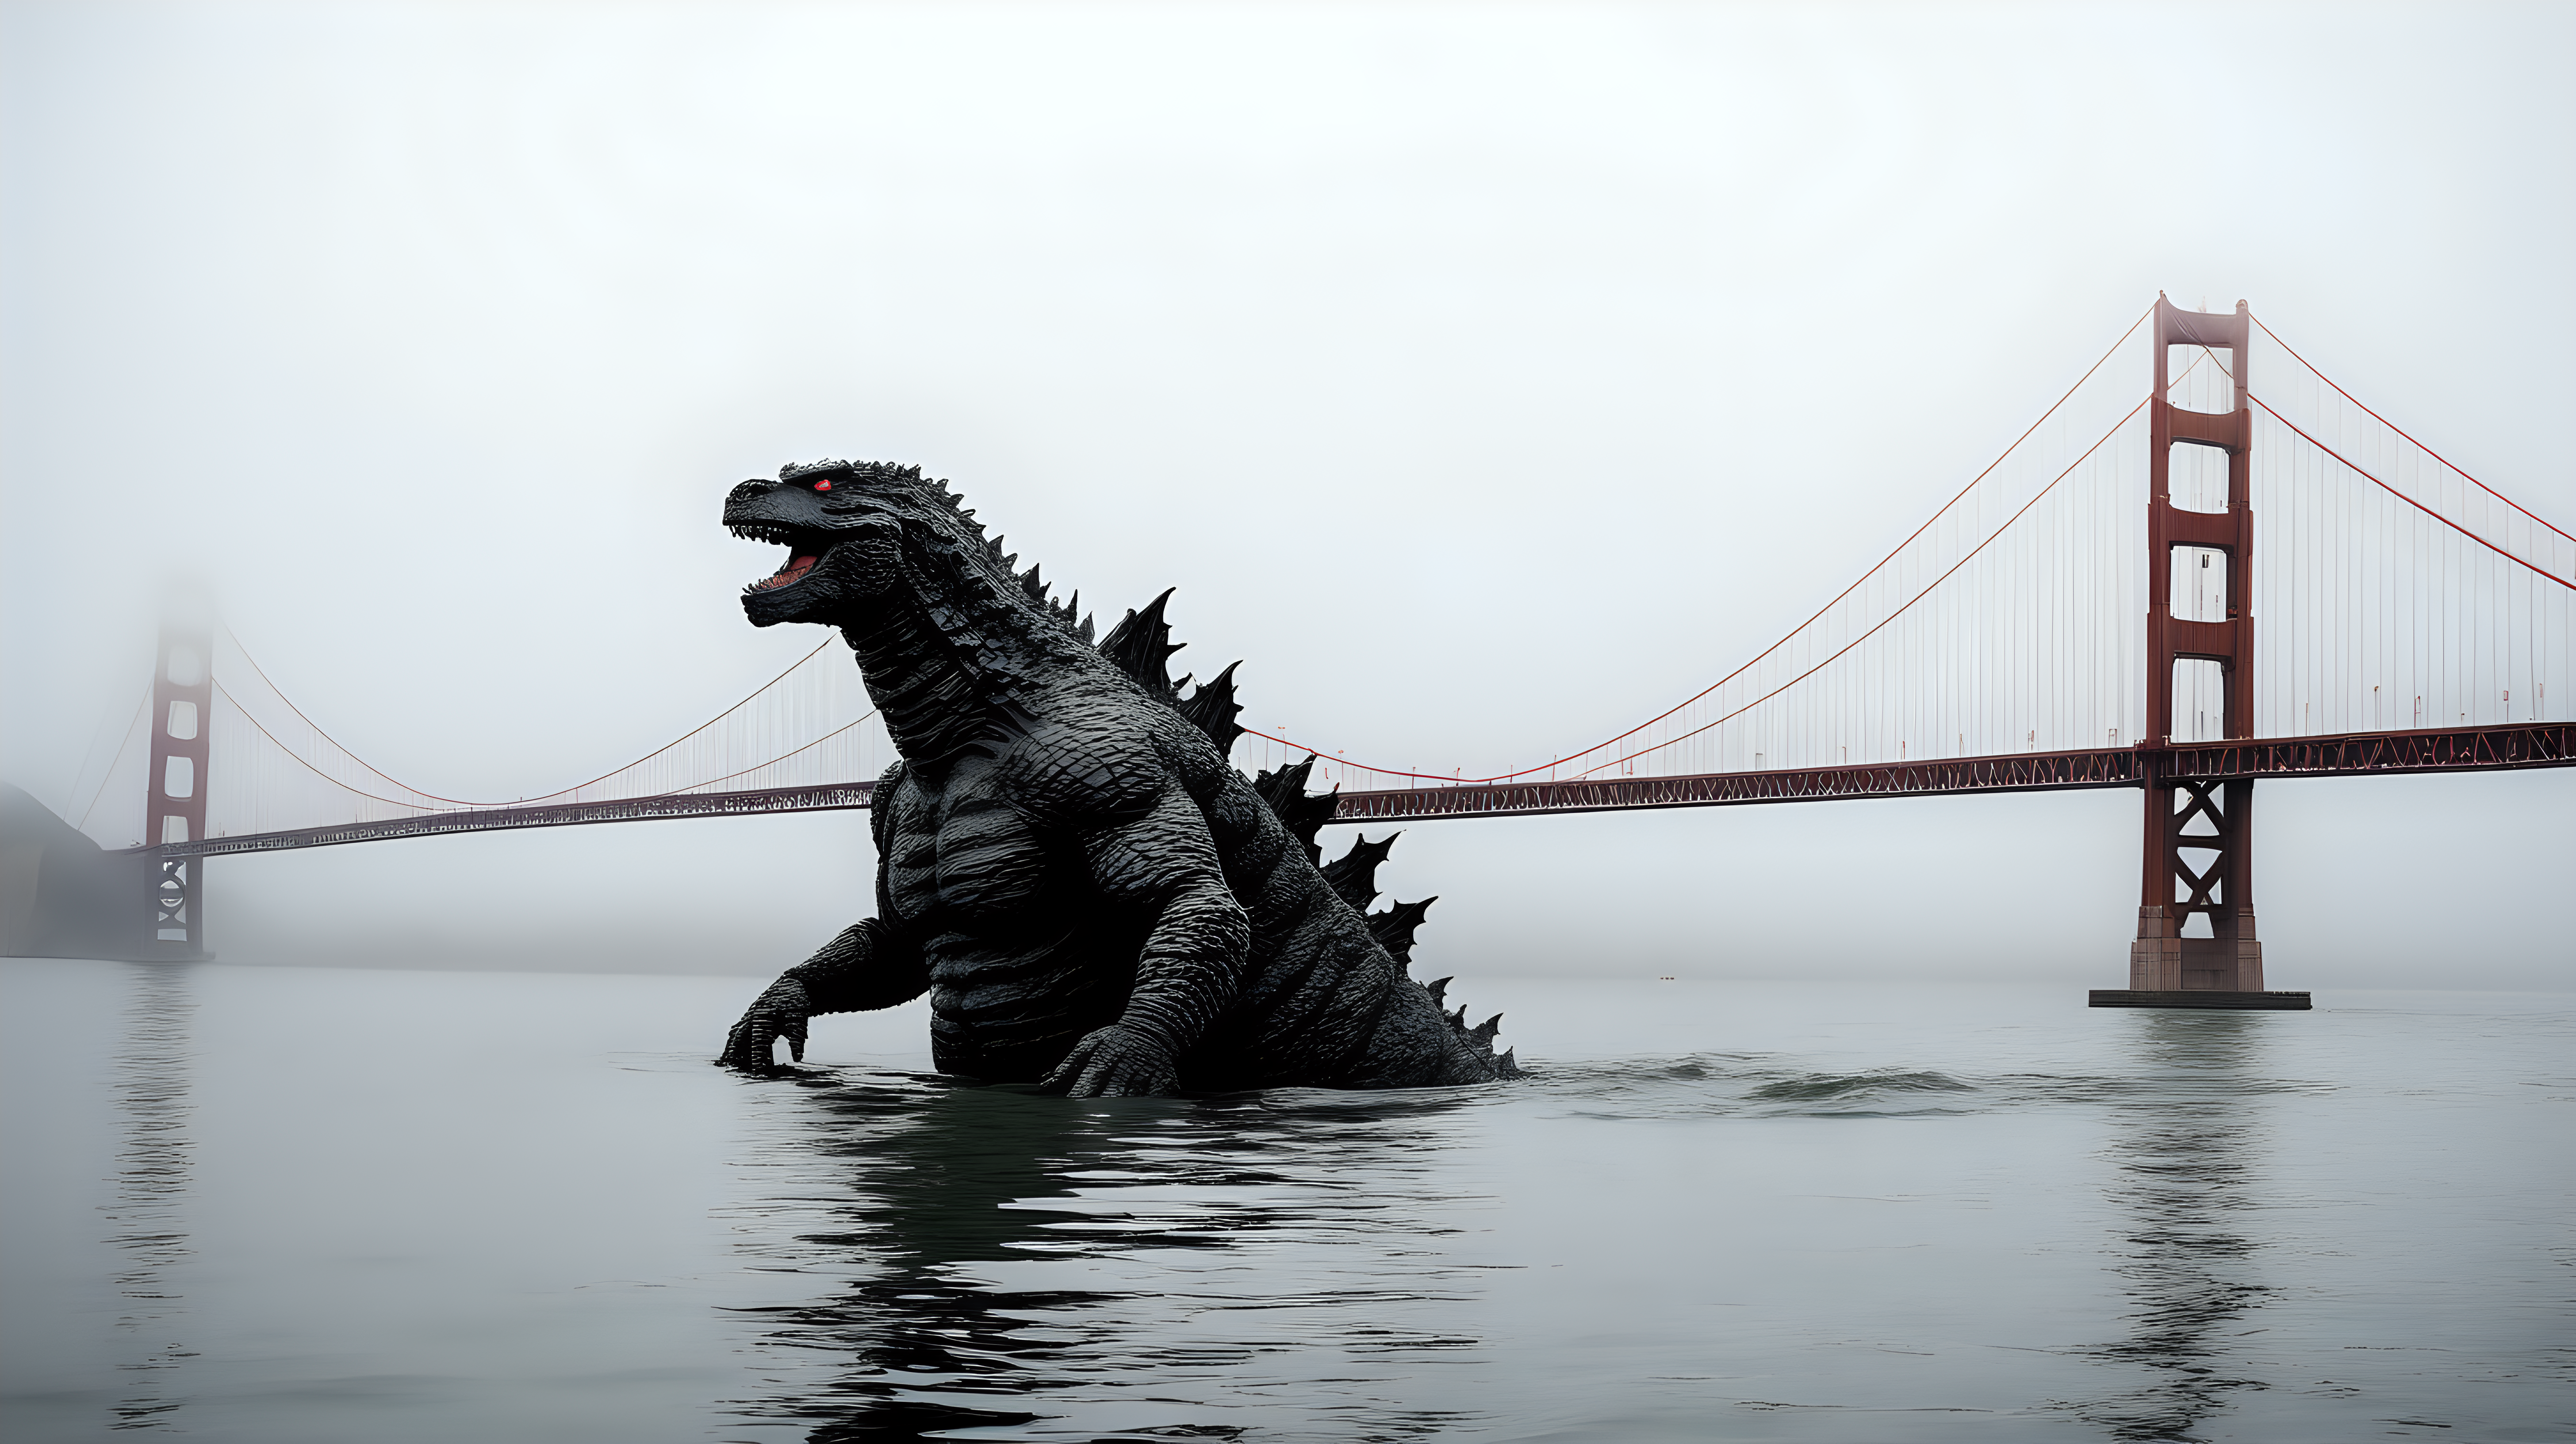 Godzilla swimming in San Francisco Bay in fog